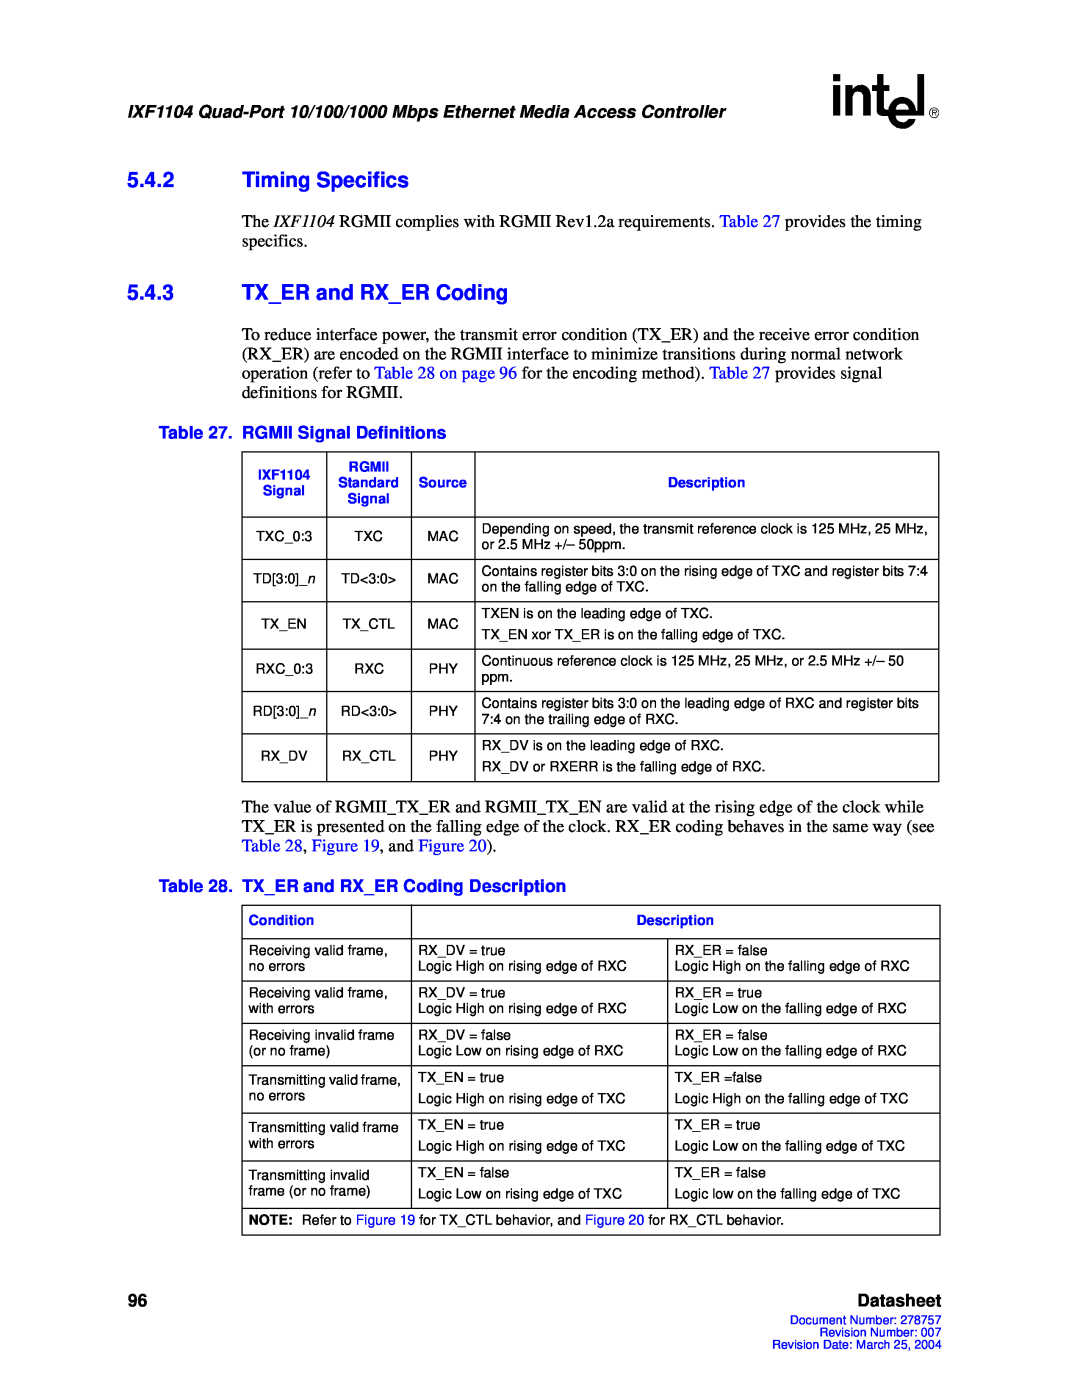 Intel IXF1104 manual 5.4.2Timing Specifics, 5.4.3TX_ER and RX_ER Coding, Datasheet 